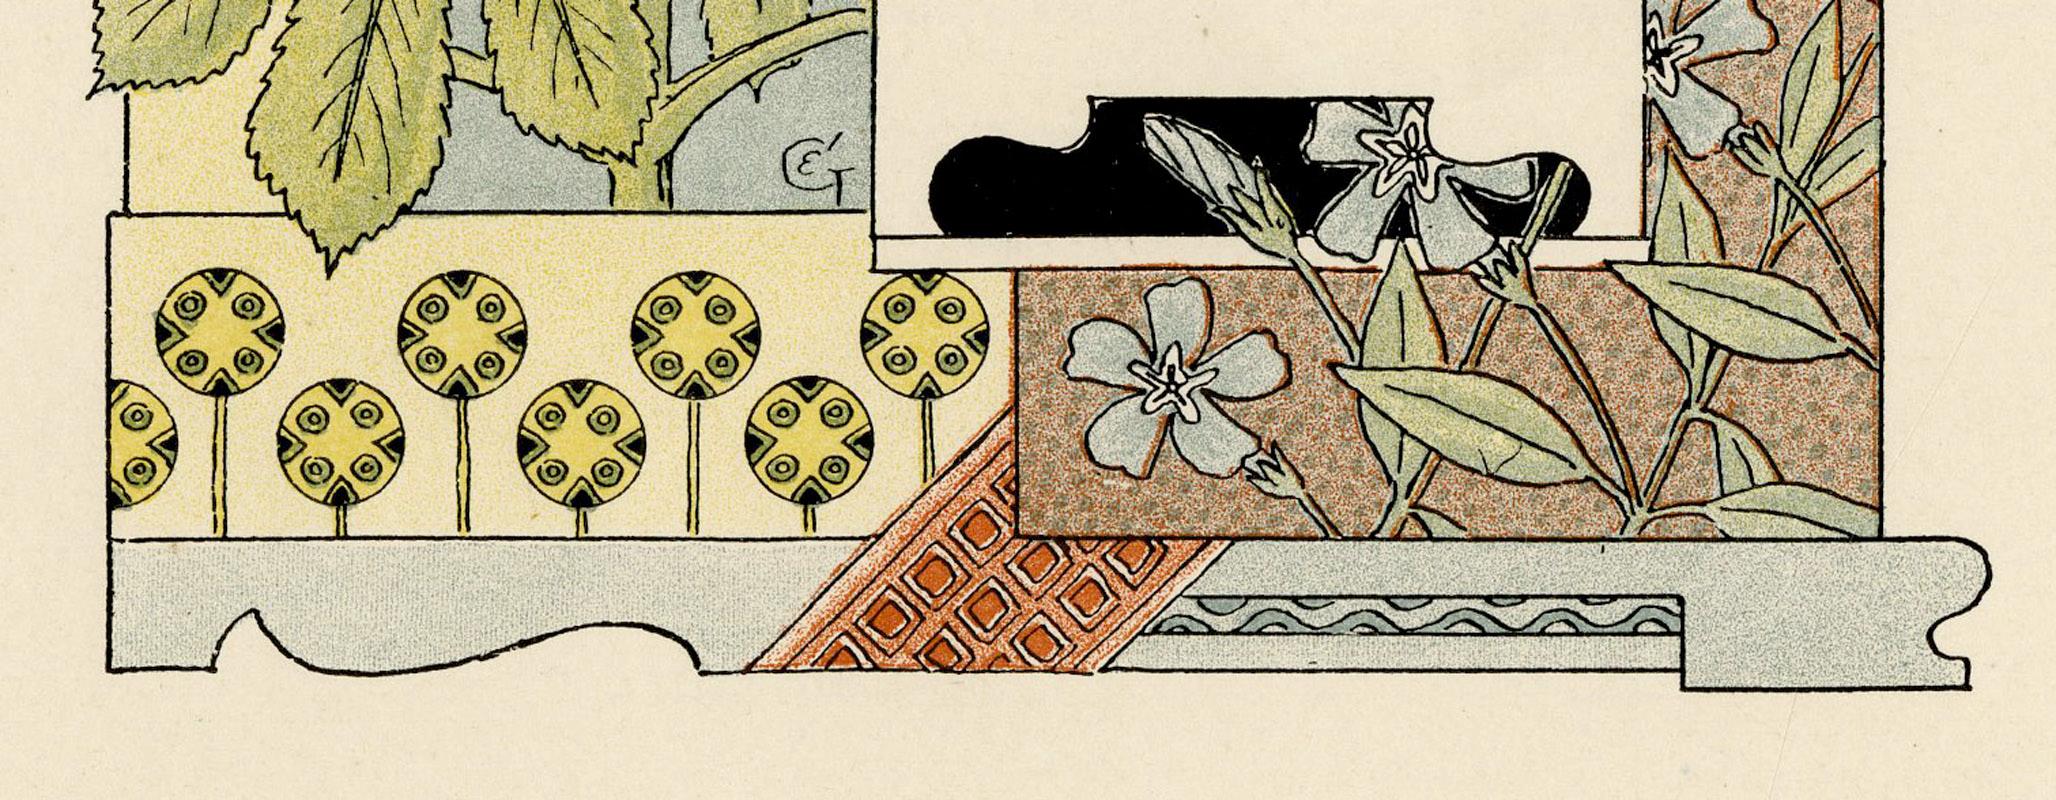 Aries-The Ram - Art Nouveau Print by Eugene Grasset